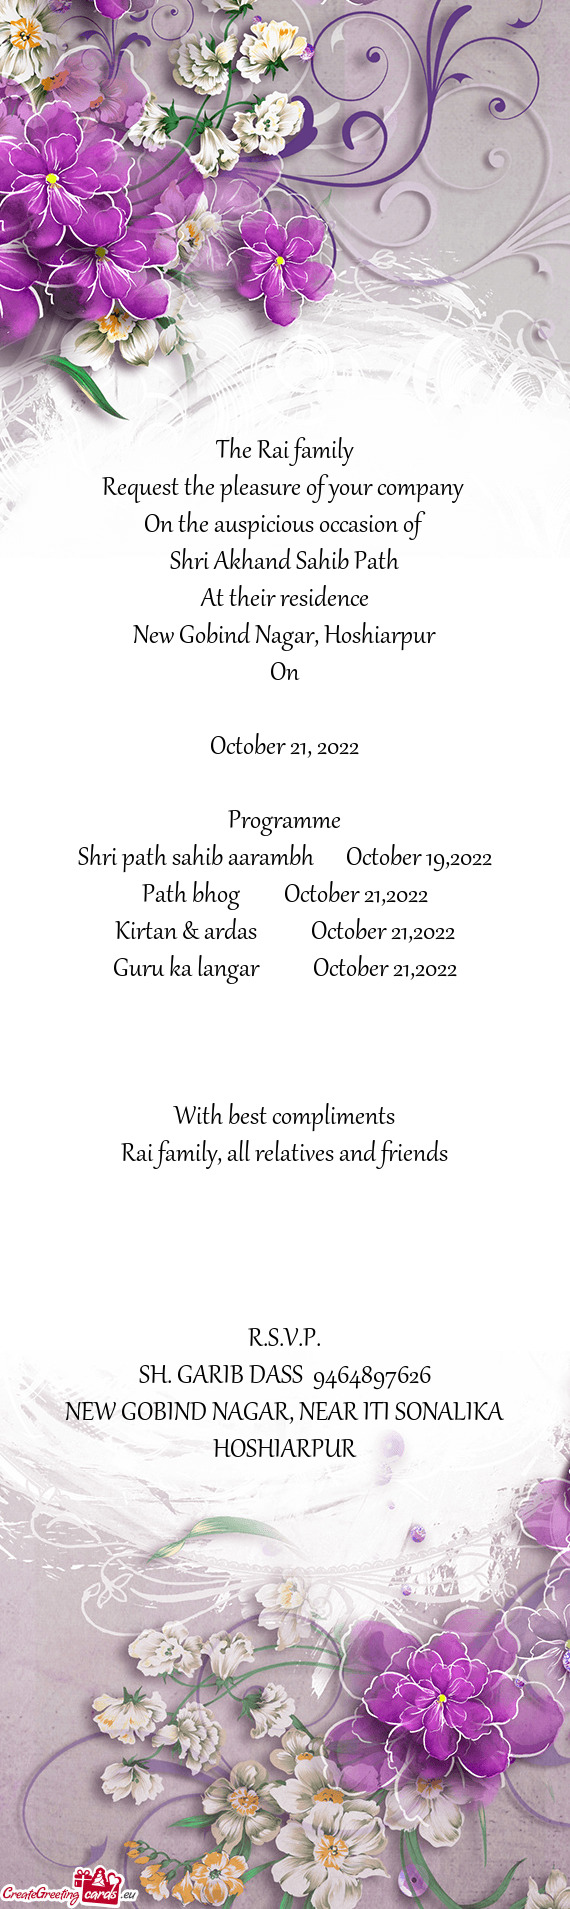 Shri path sahib aarambh October 19,2022